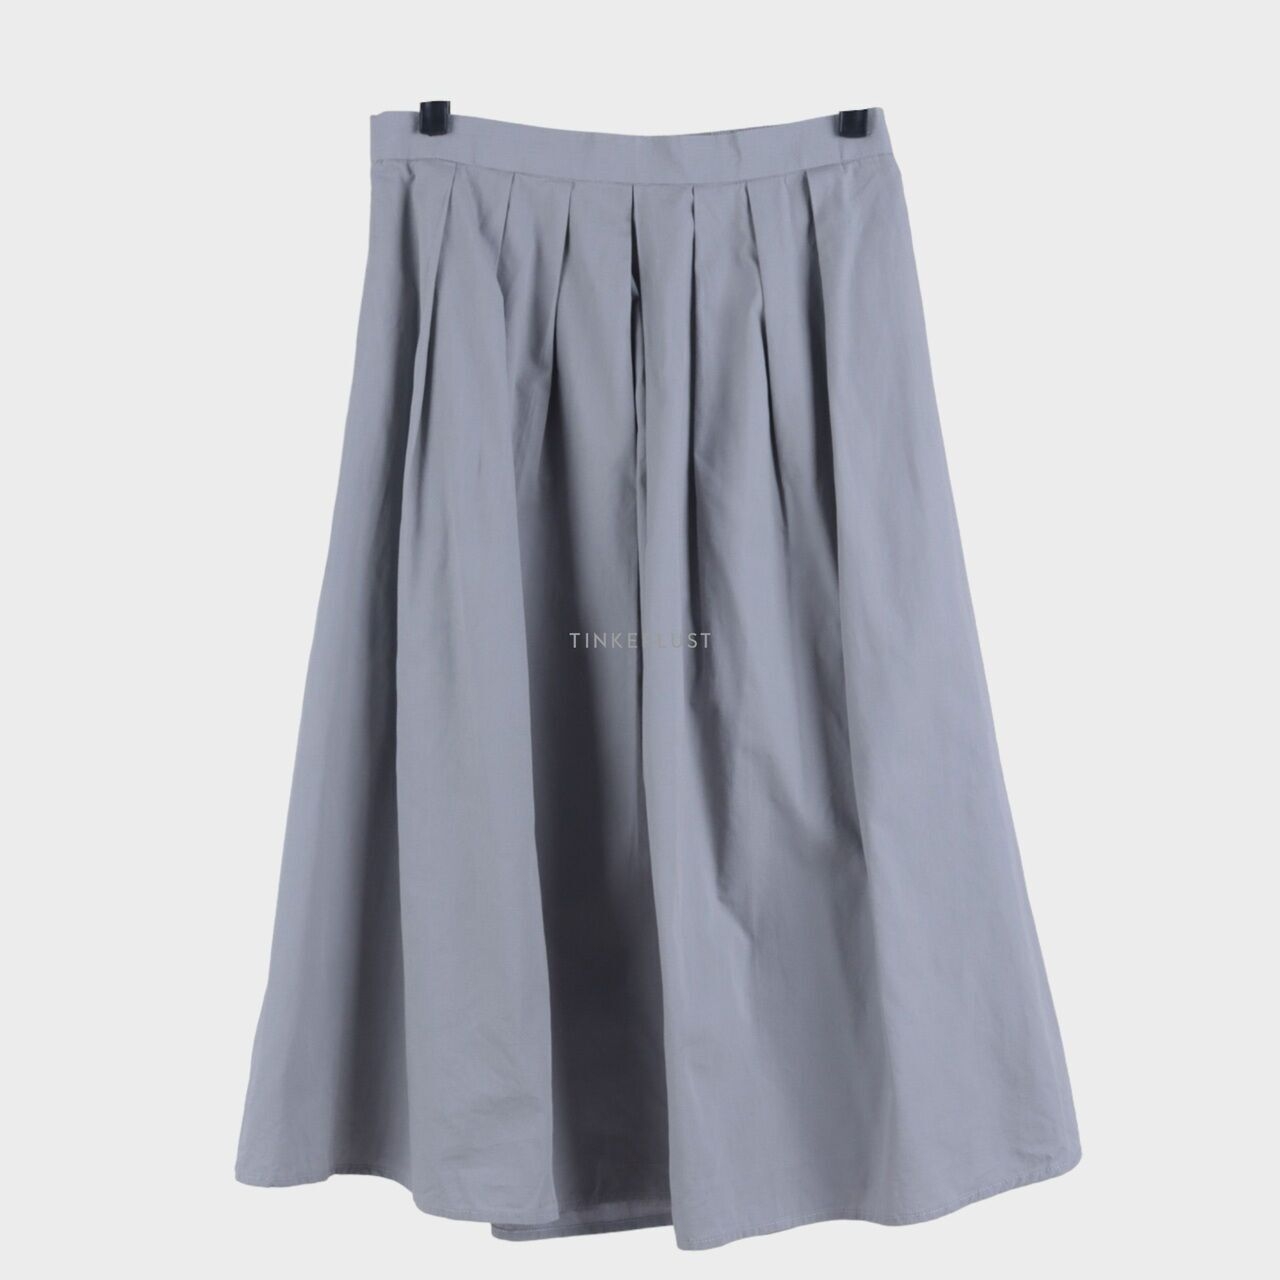 Klok The Label Grey Midi Skirt